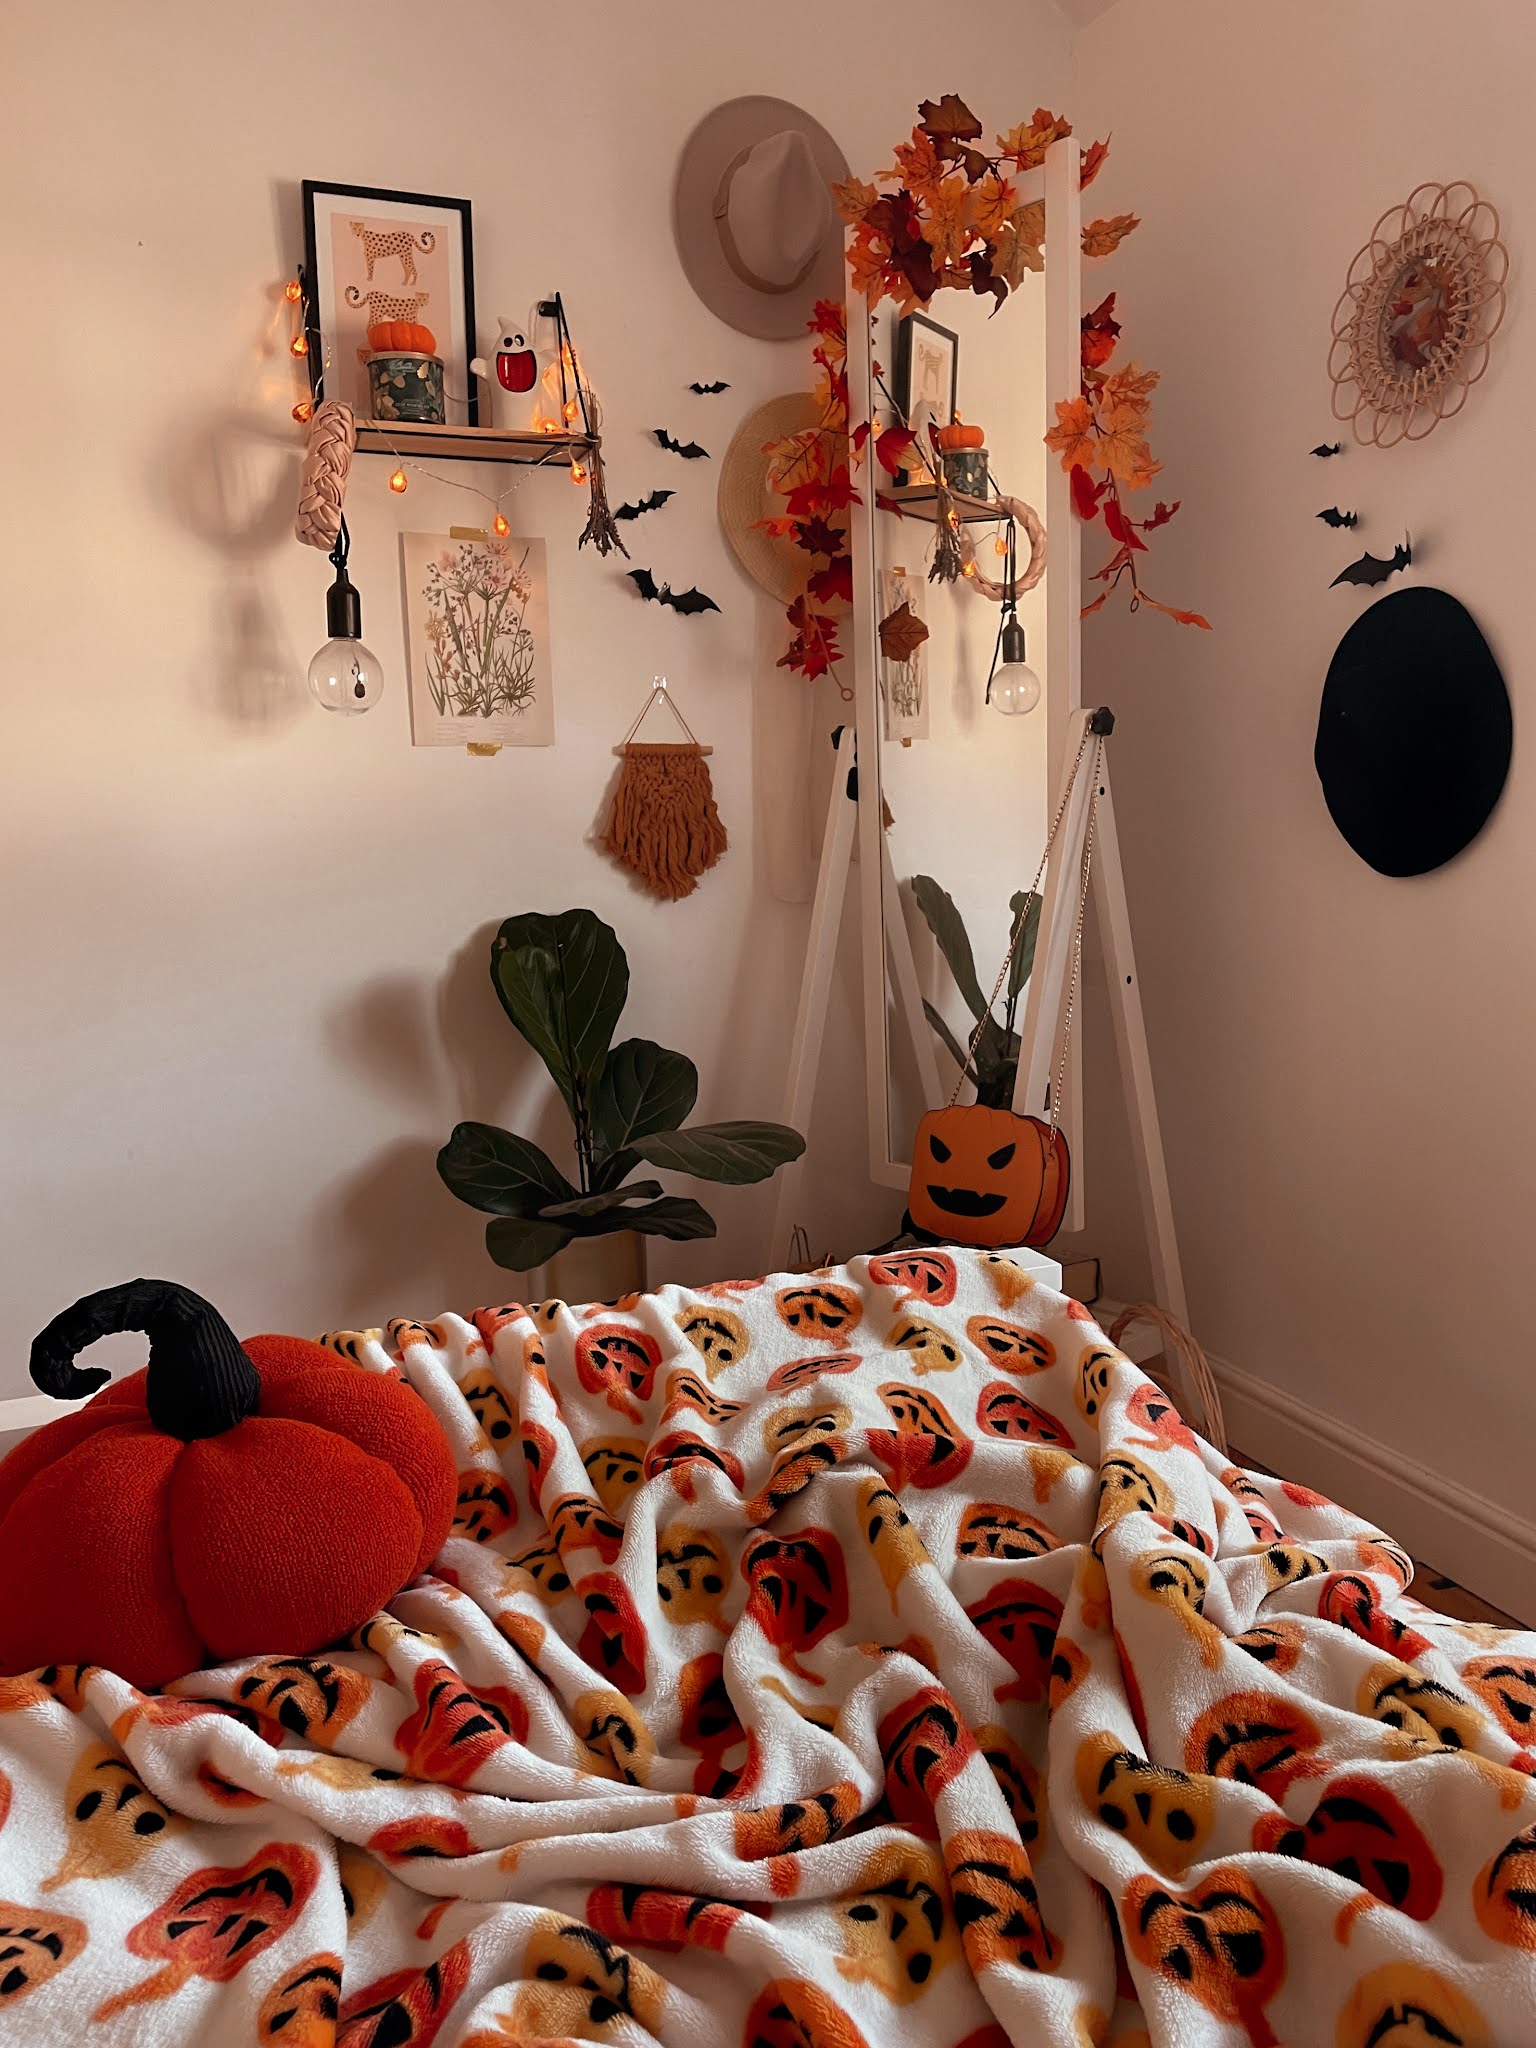 The Best Autumn Bedroom Decor | Pint Sized Beauty